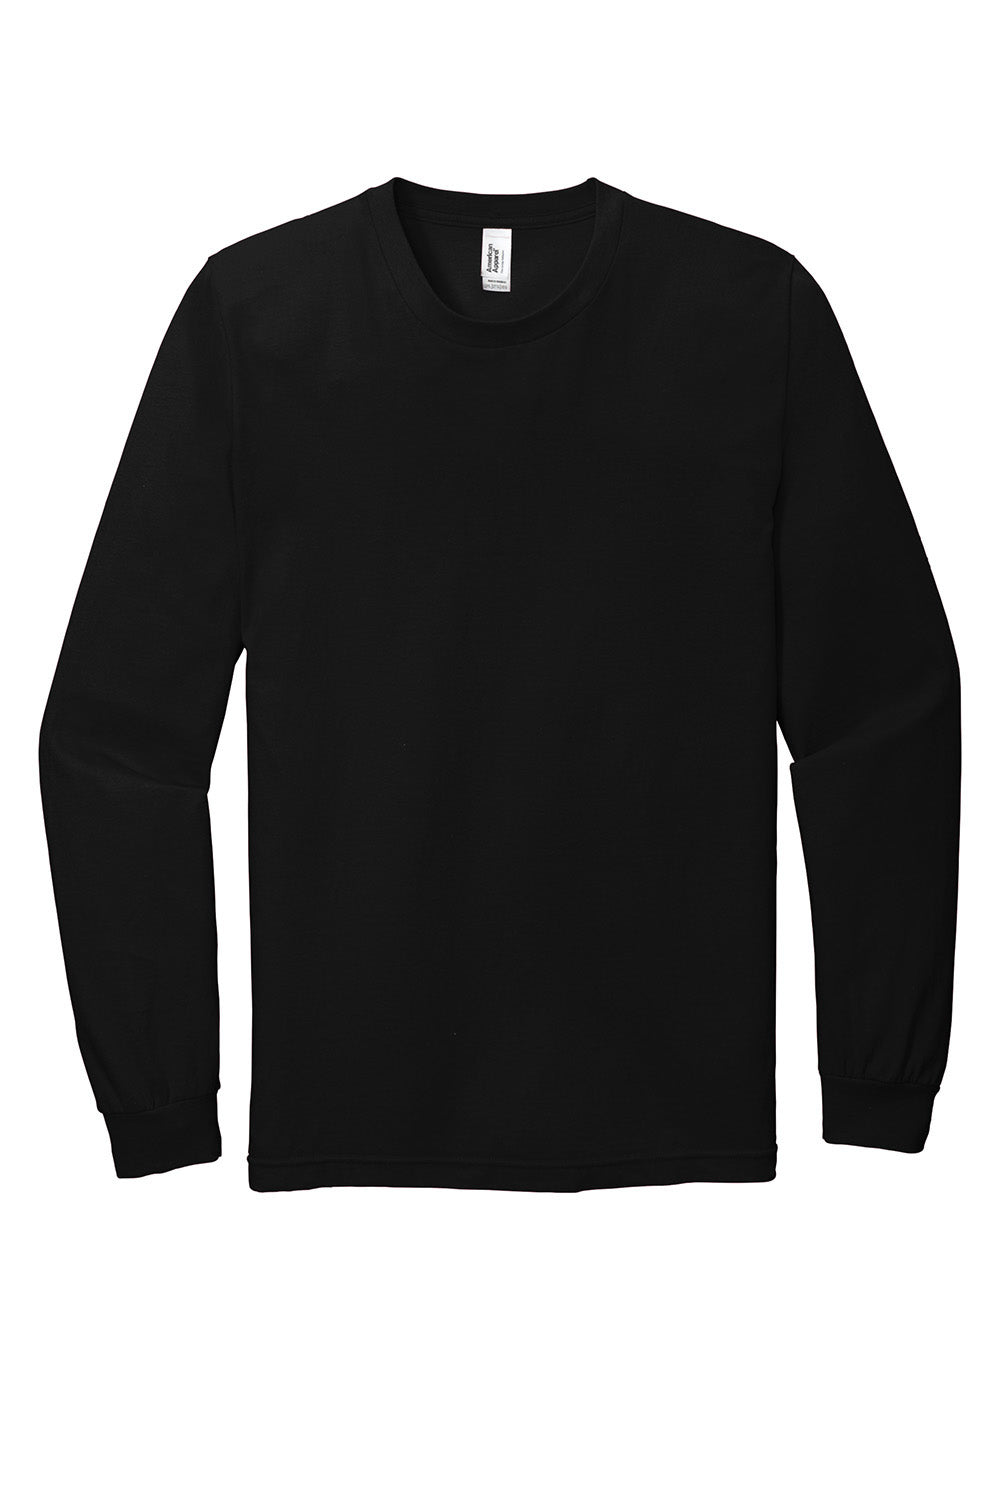 American Apparel 2007 Mens Fine Jersey Long Sleeve Crewneck T-Shirt Black Flat Front